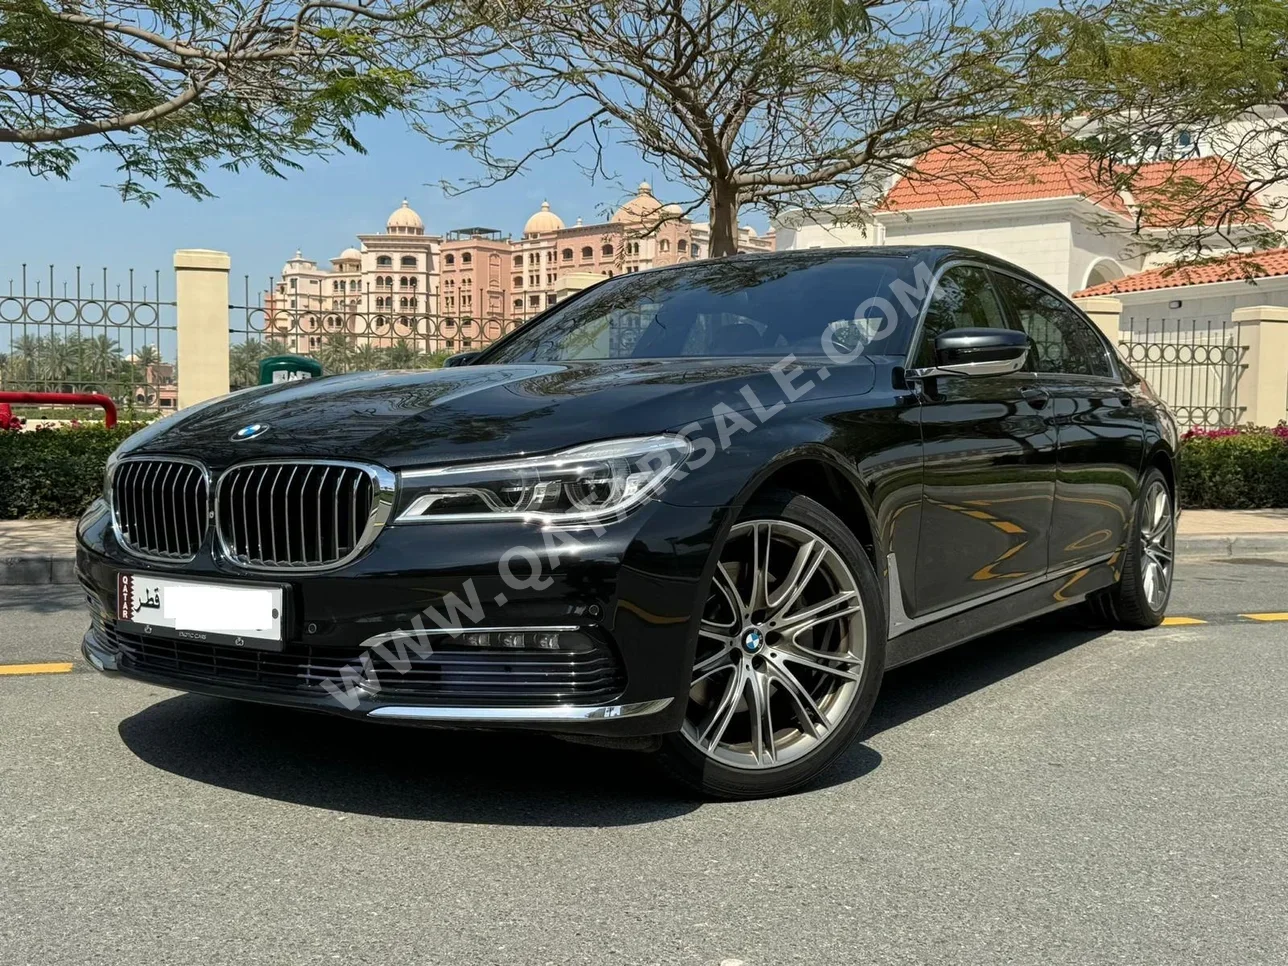 BMW  7-Series  730 Li  2017  Automatic  67,000 Km  4 Cylinder  Rear Wheel Drive (RWD)  Sedan  Black